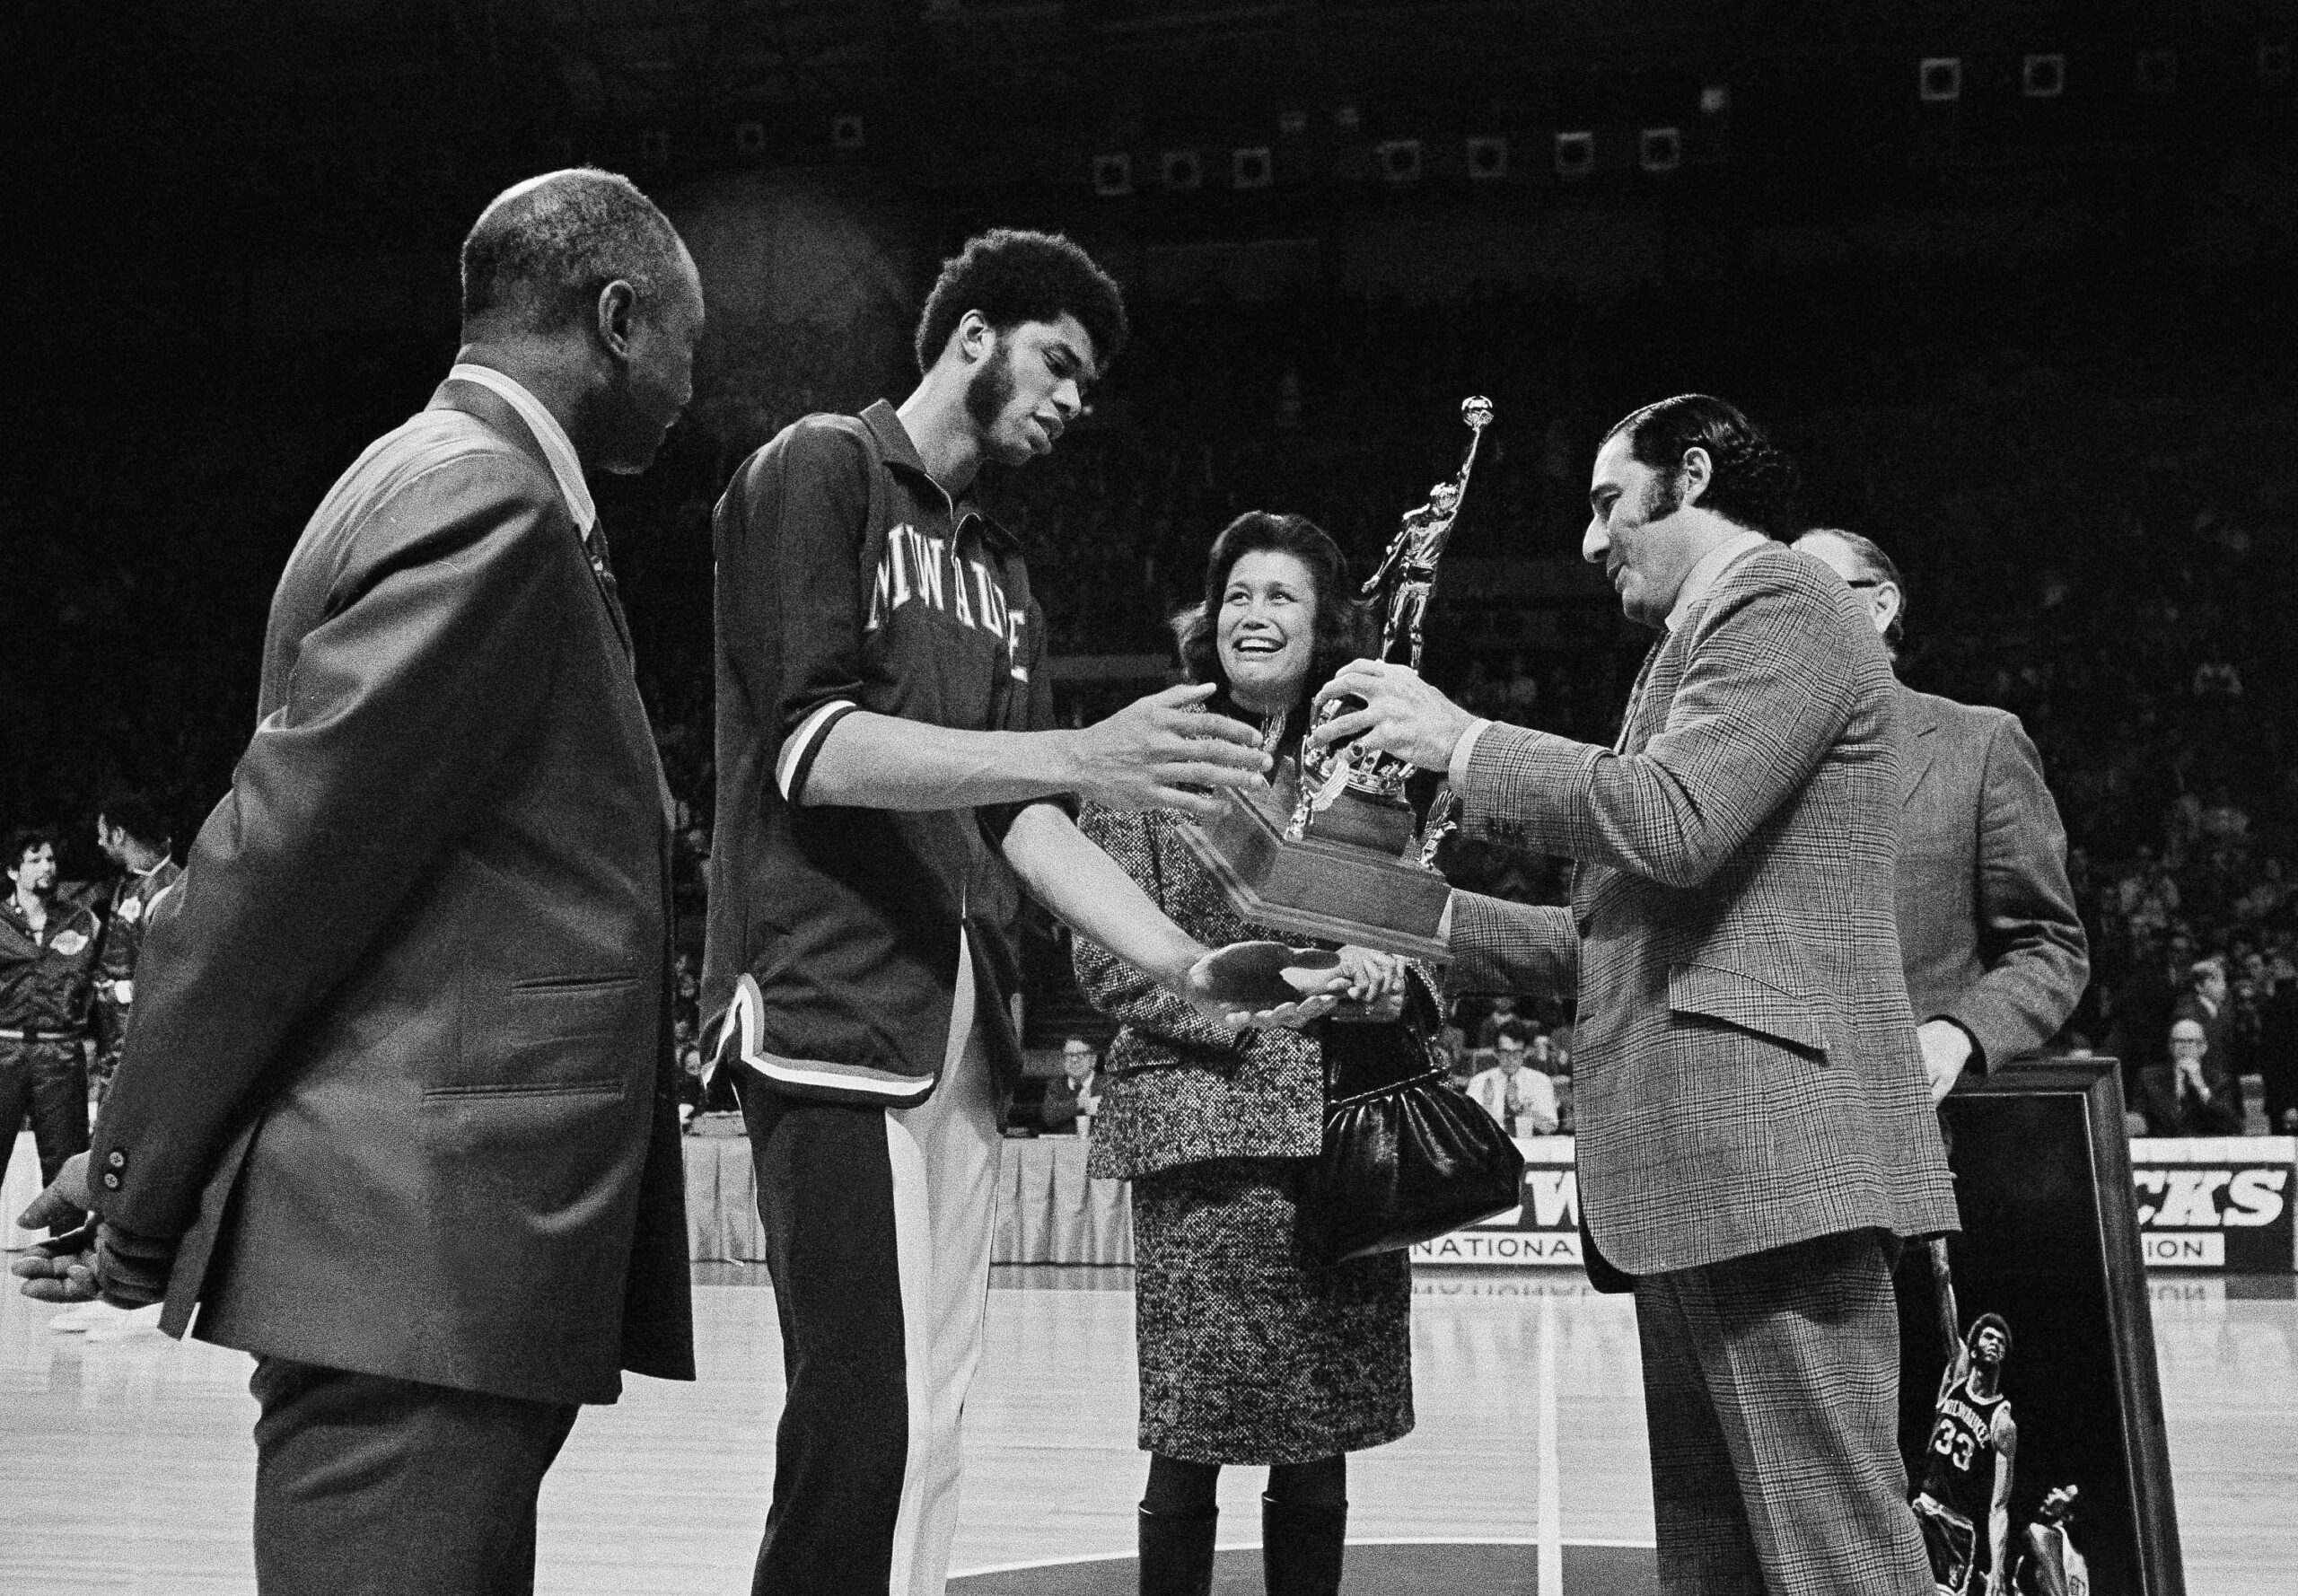 Lew Alcindor, now Kareem Abdul-Jabbar, named NBA's MVP after the 1971 NBA Finals